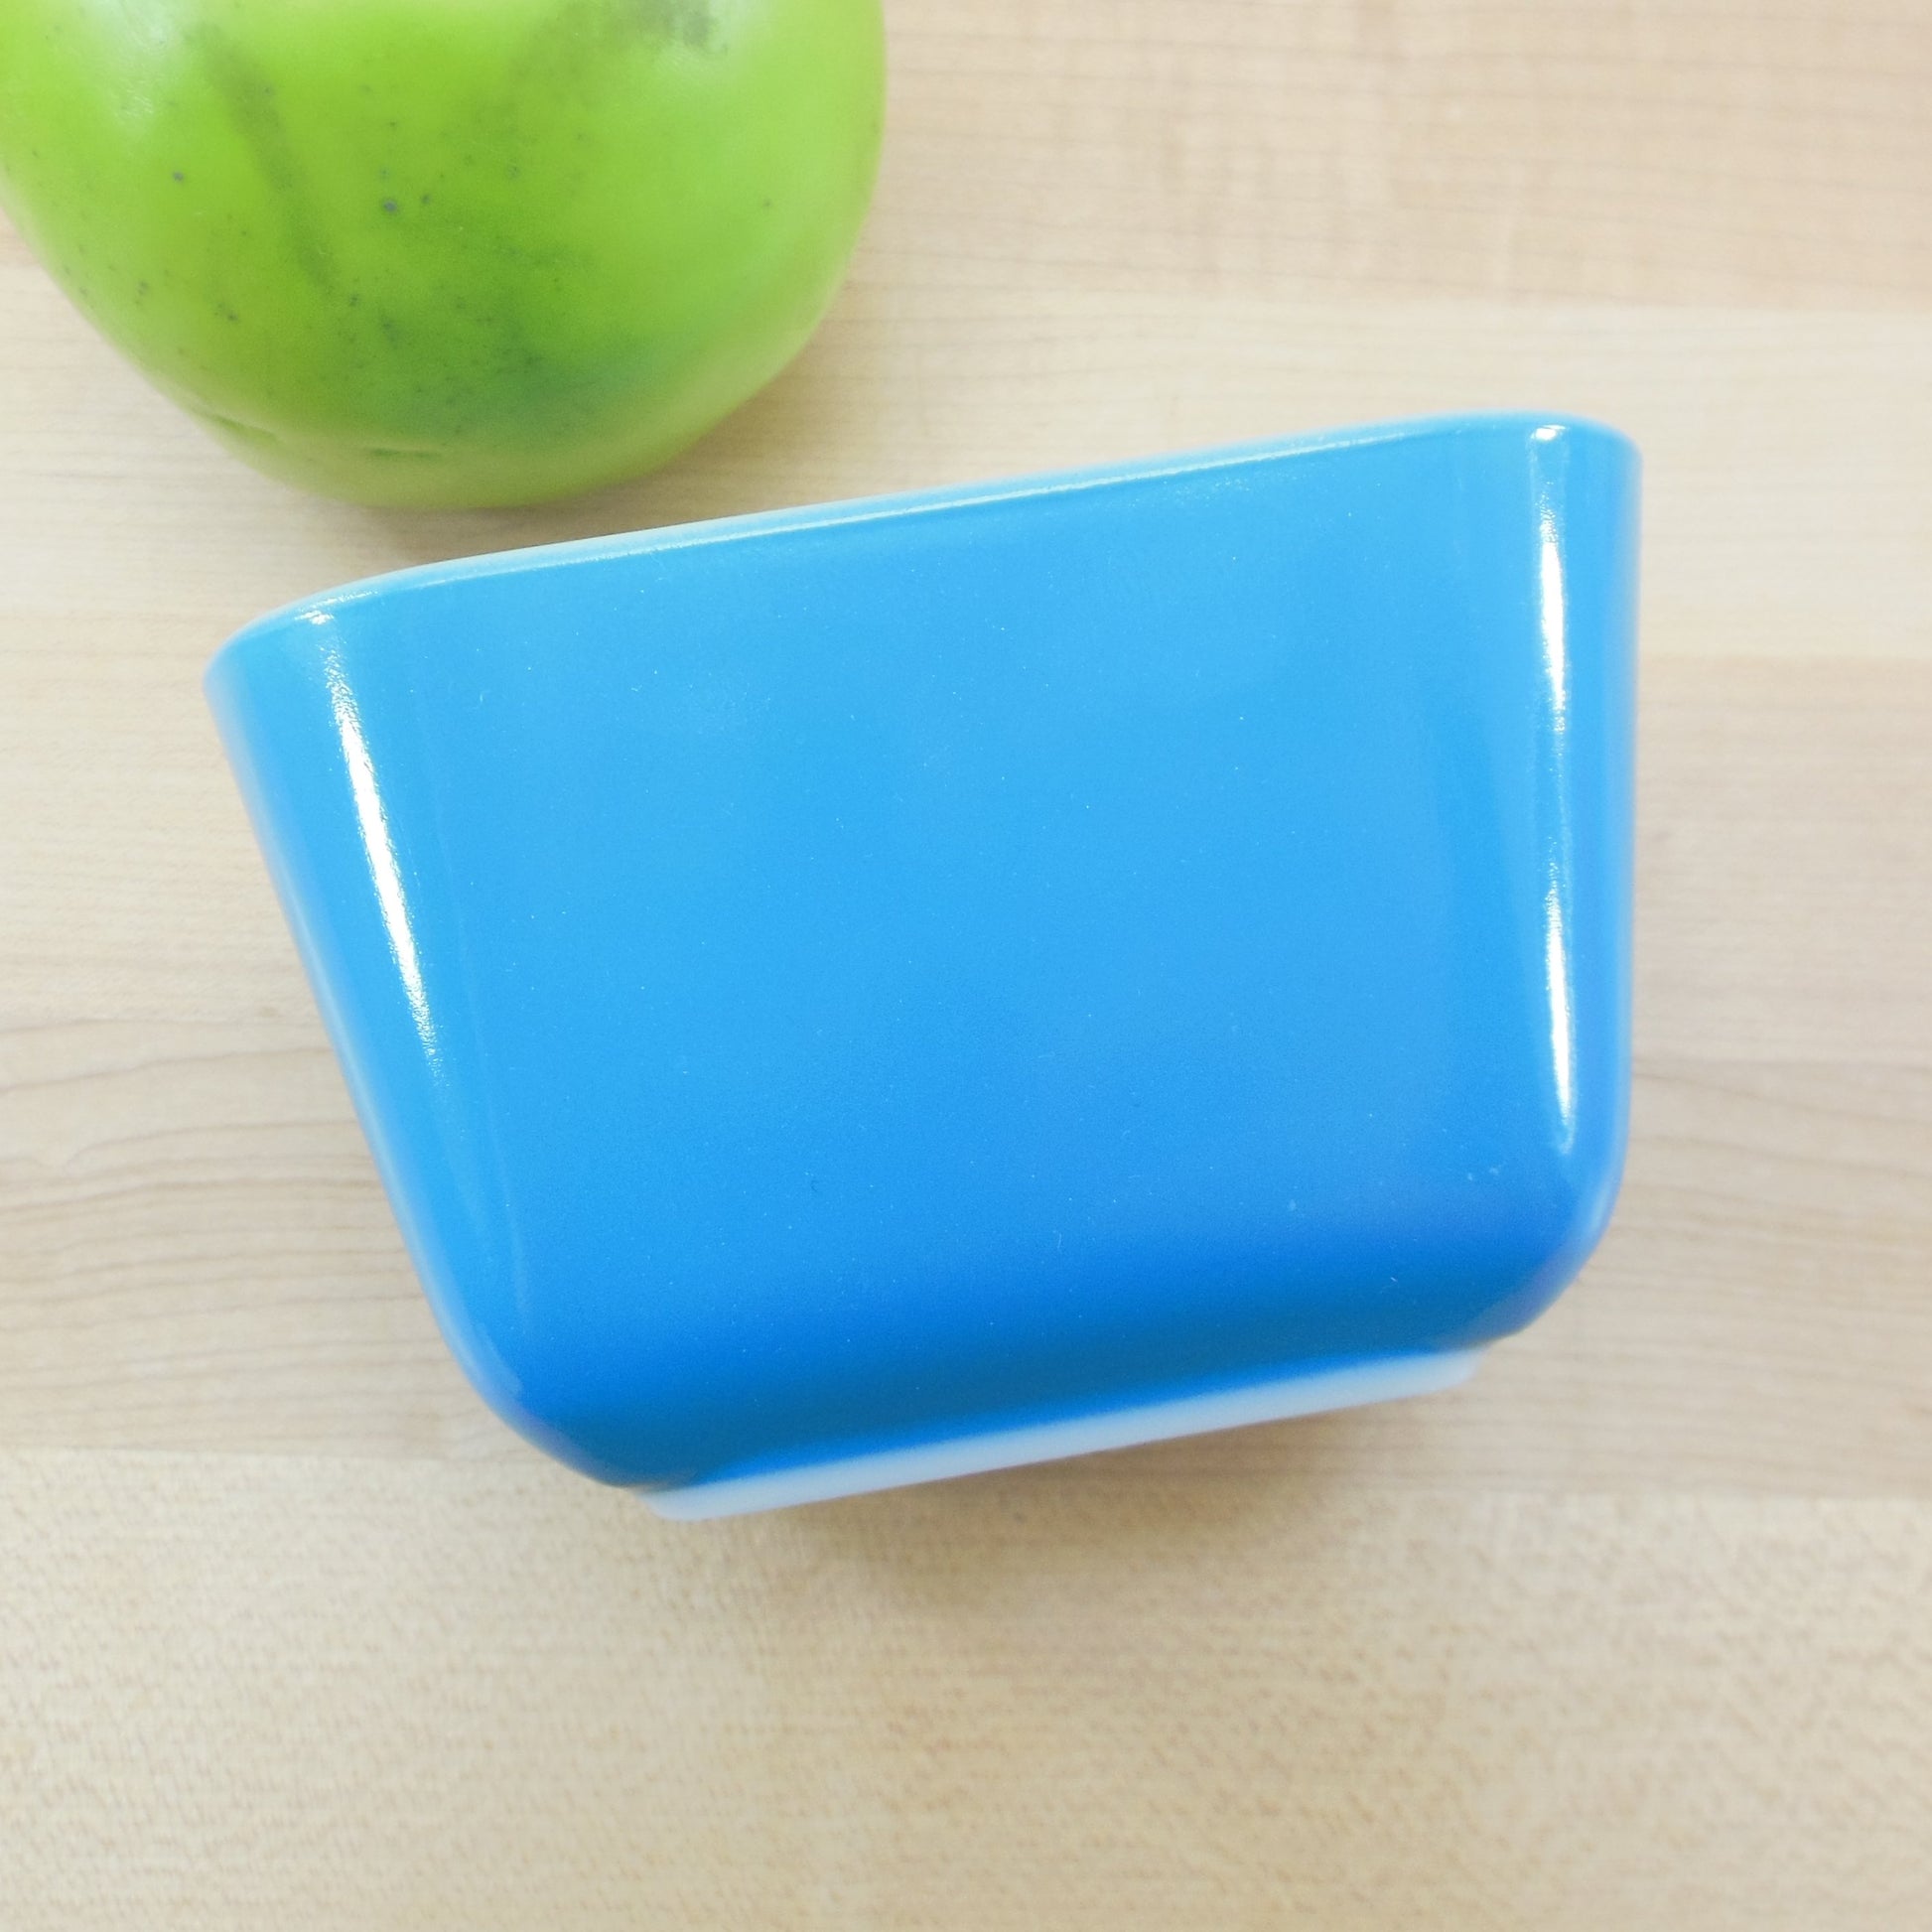 Pyrex Glass 501 Refrigerator Dish No Lid - Your Choice Blue